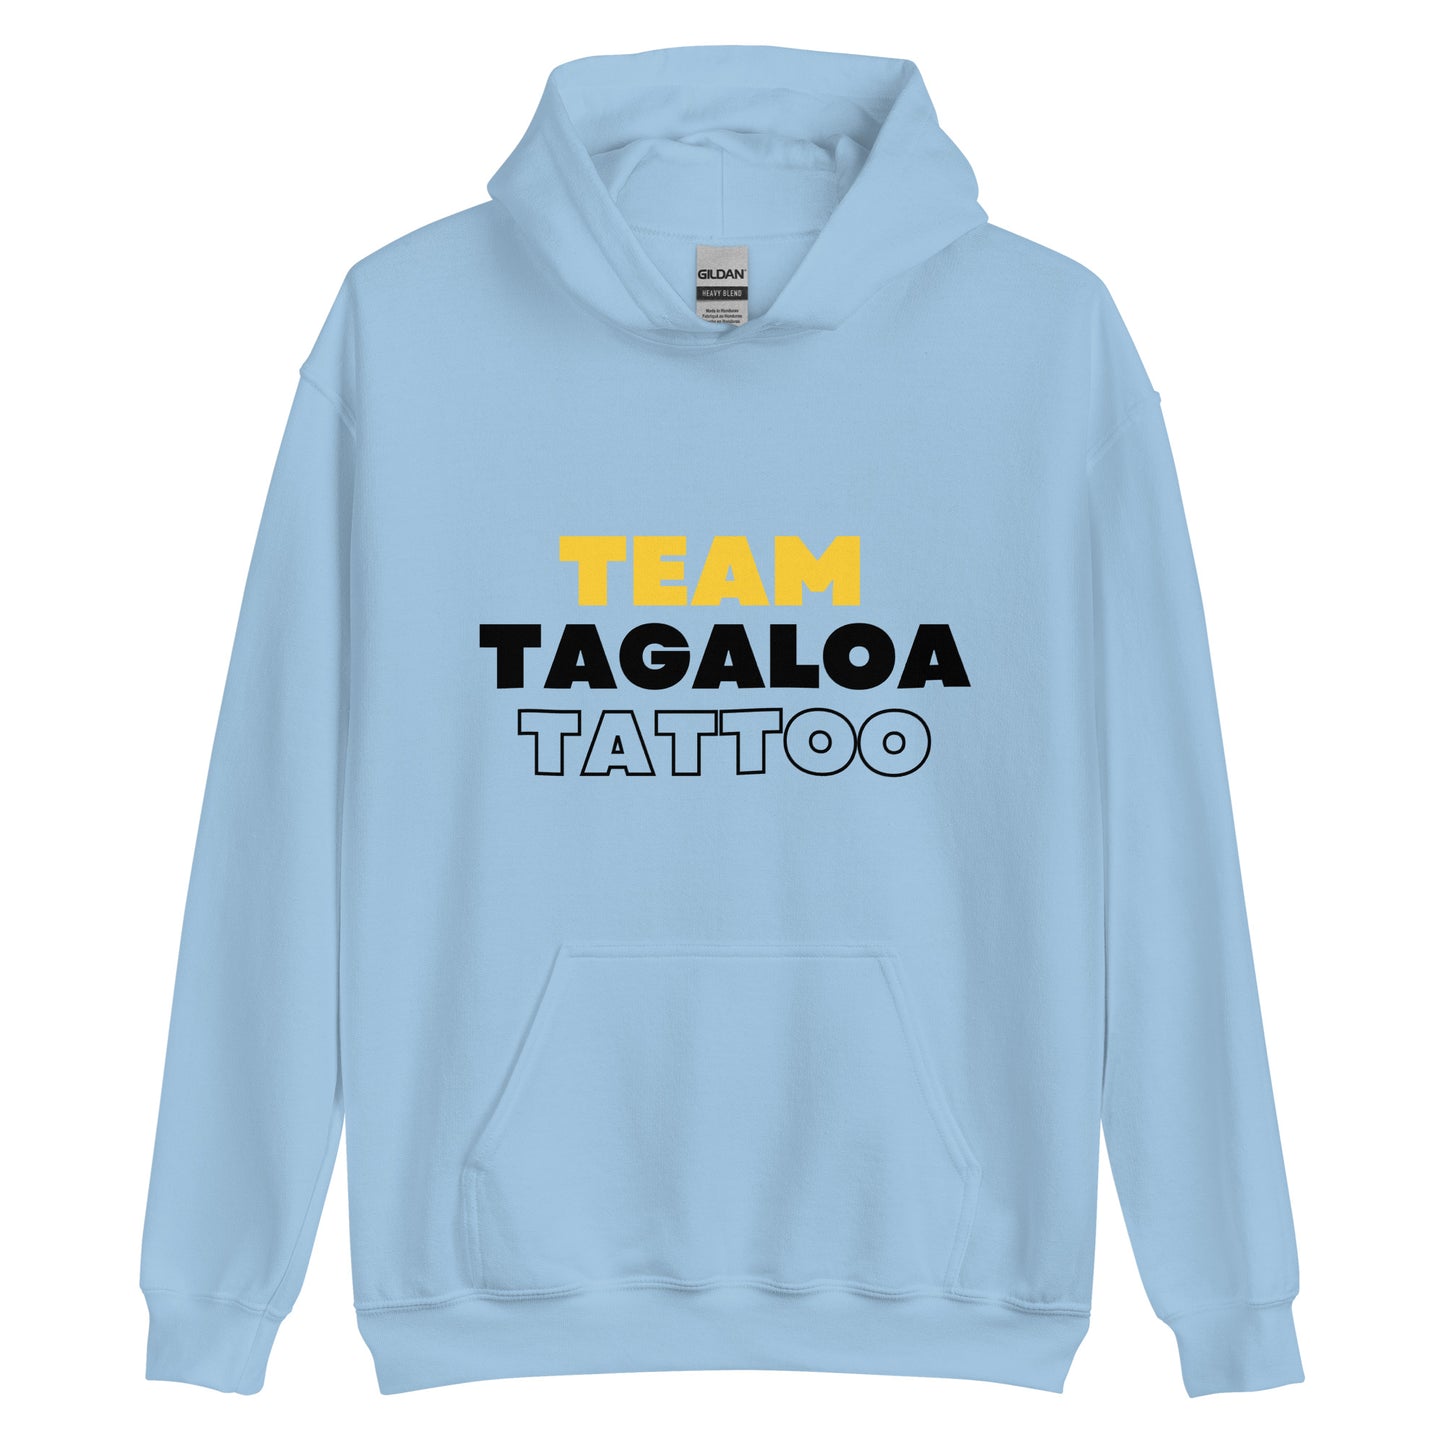 Yellow and Black Team Tagaloa Hoodie